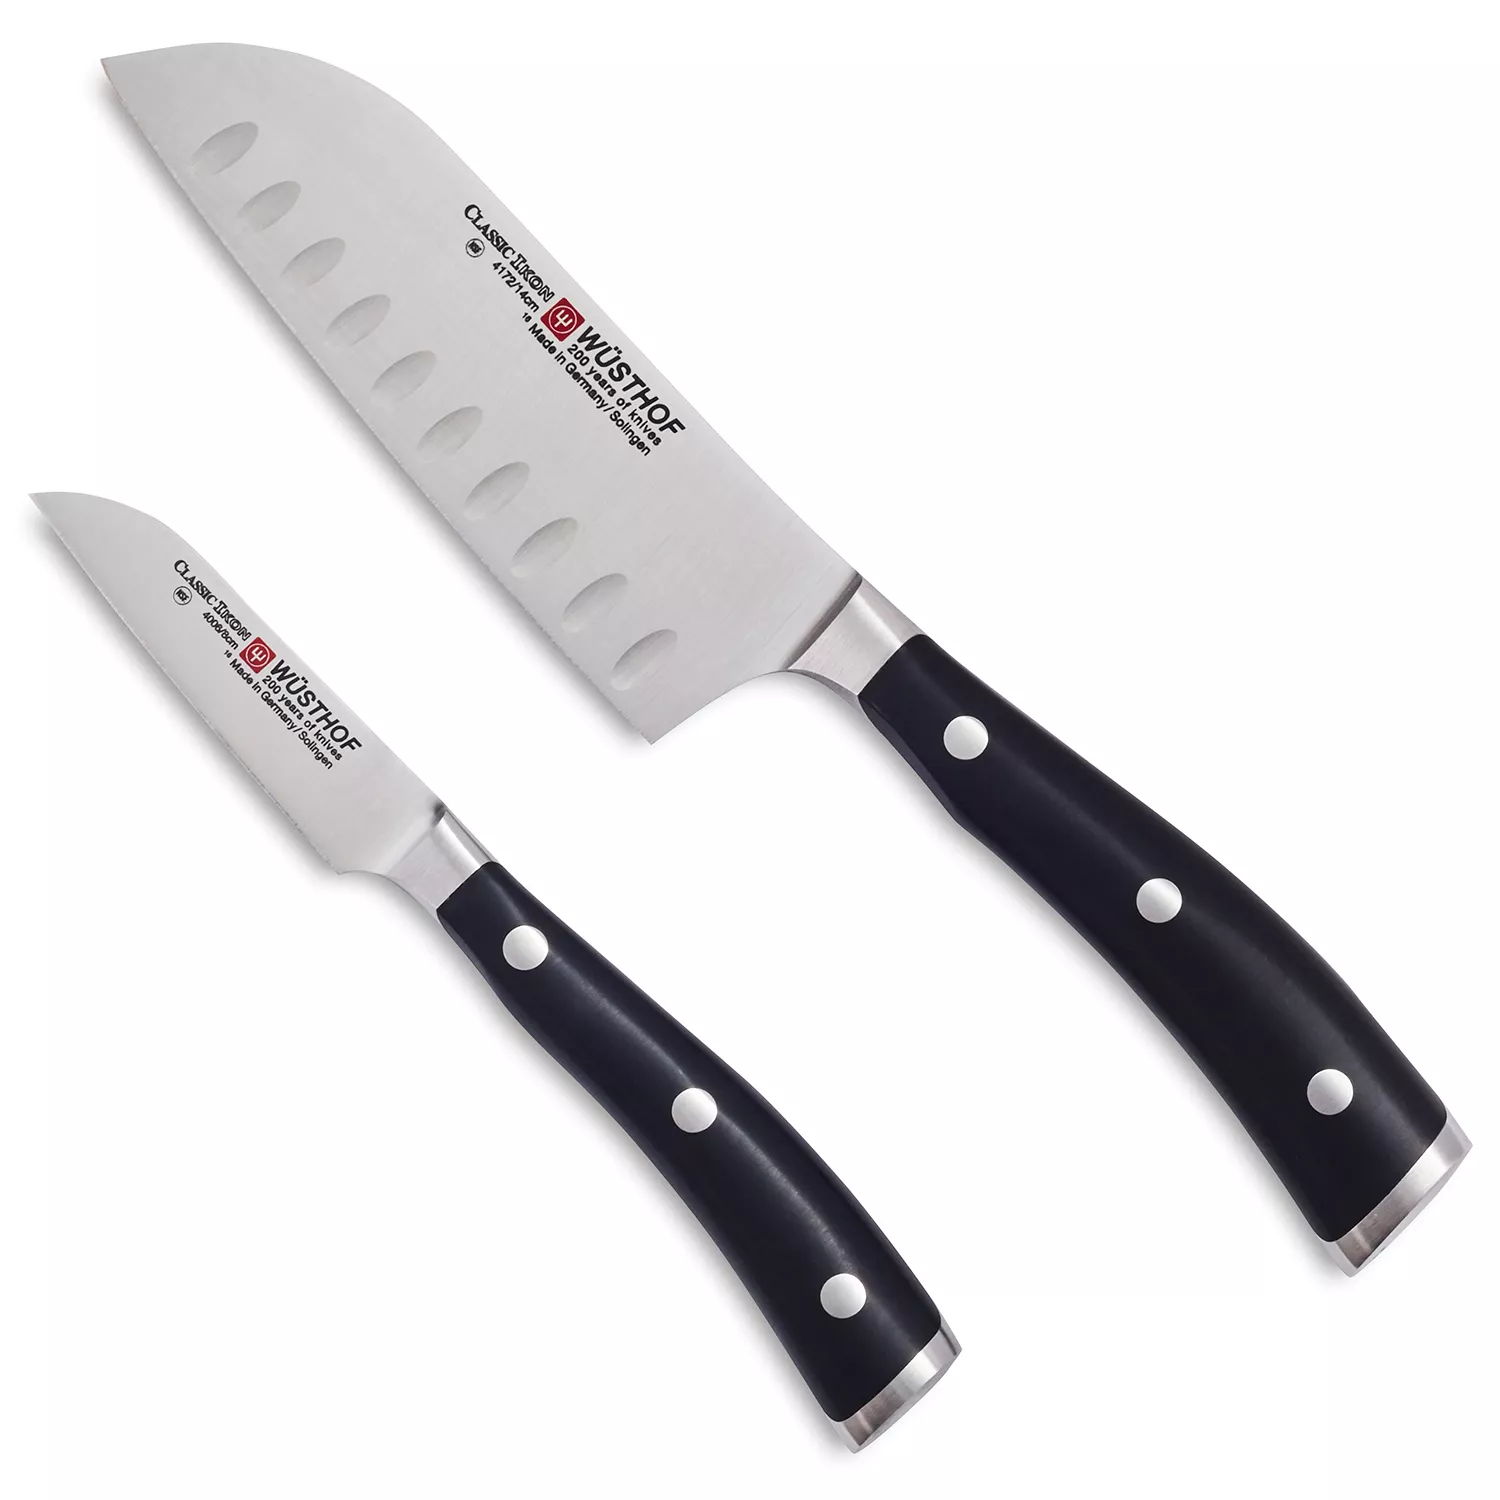 2 pc Cook's Knife Set - Wusthof Classic IKON - Eversharp Knives